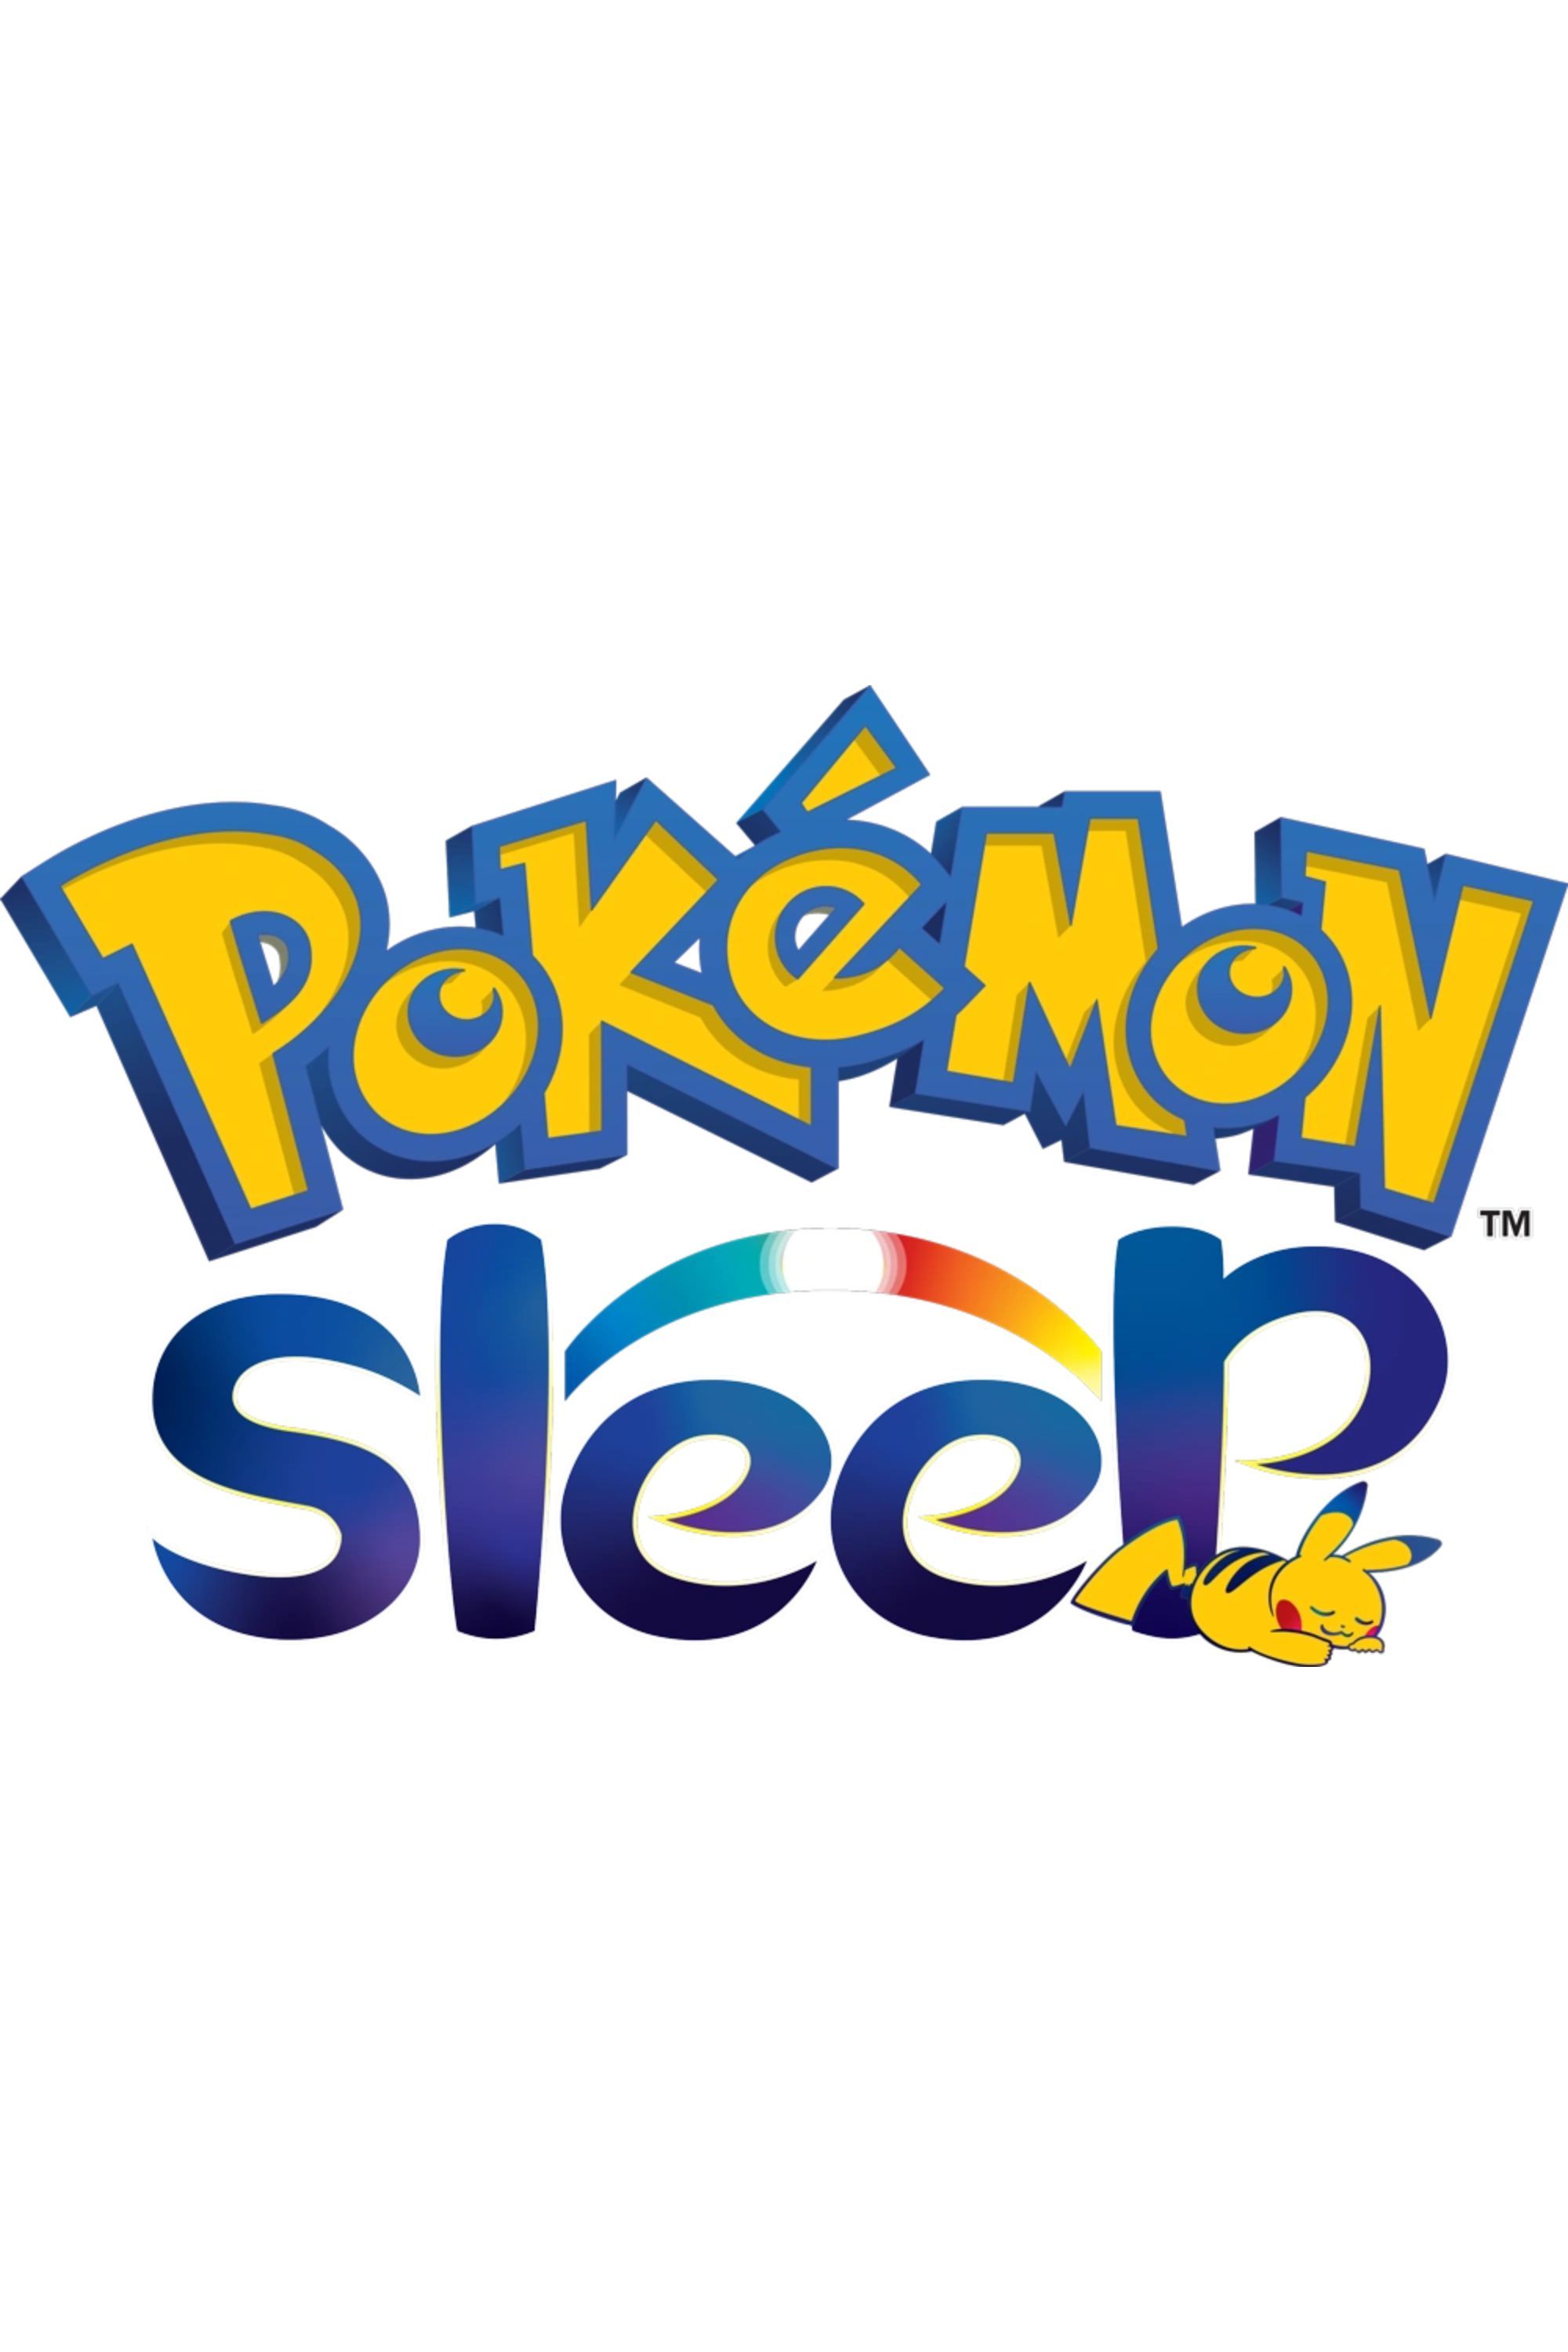 Pokemon Sleep Tag Image